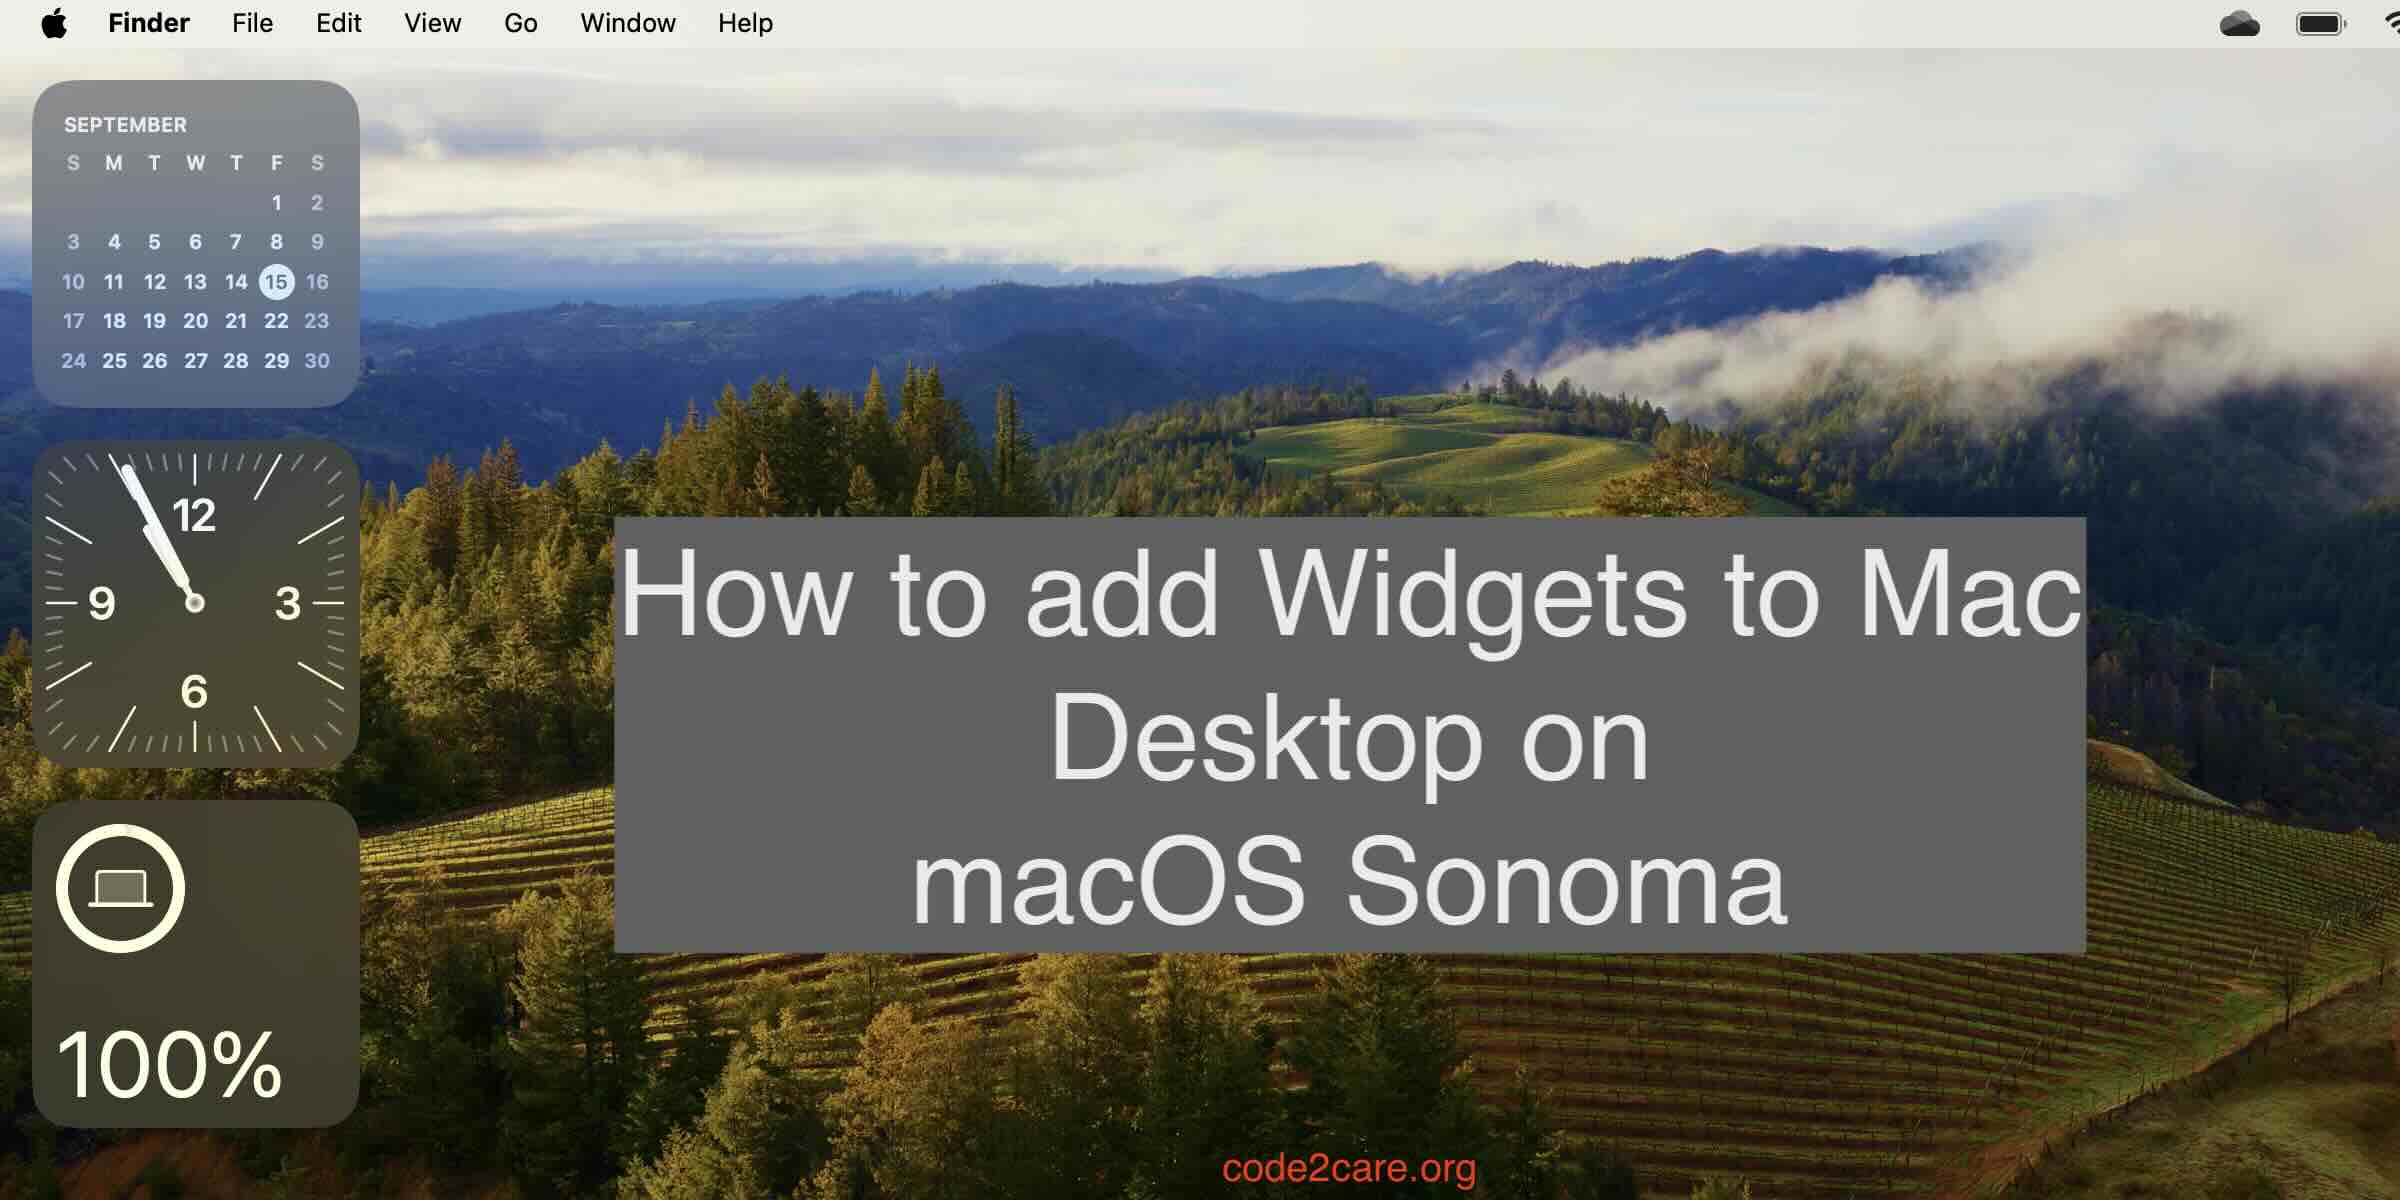 How to add Widgets to Mac Desktop on macOS Sonoma